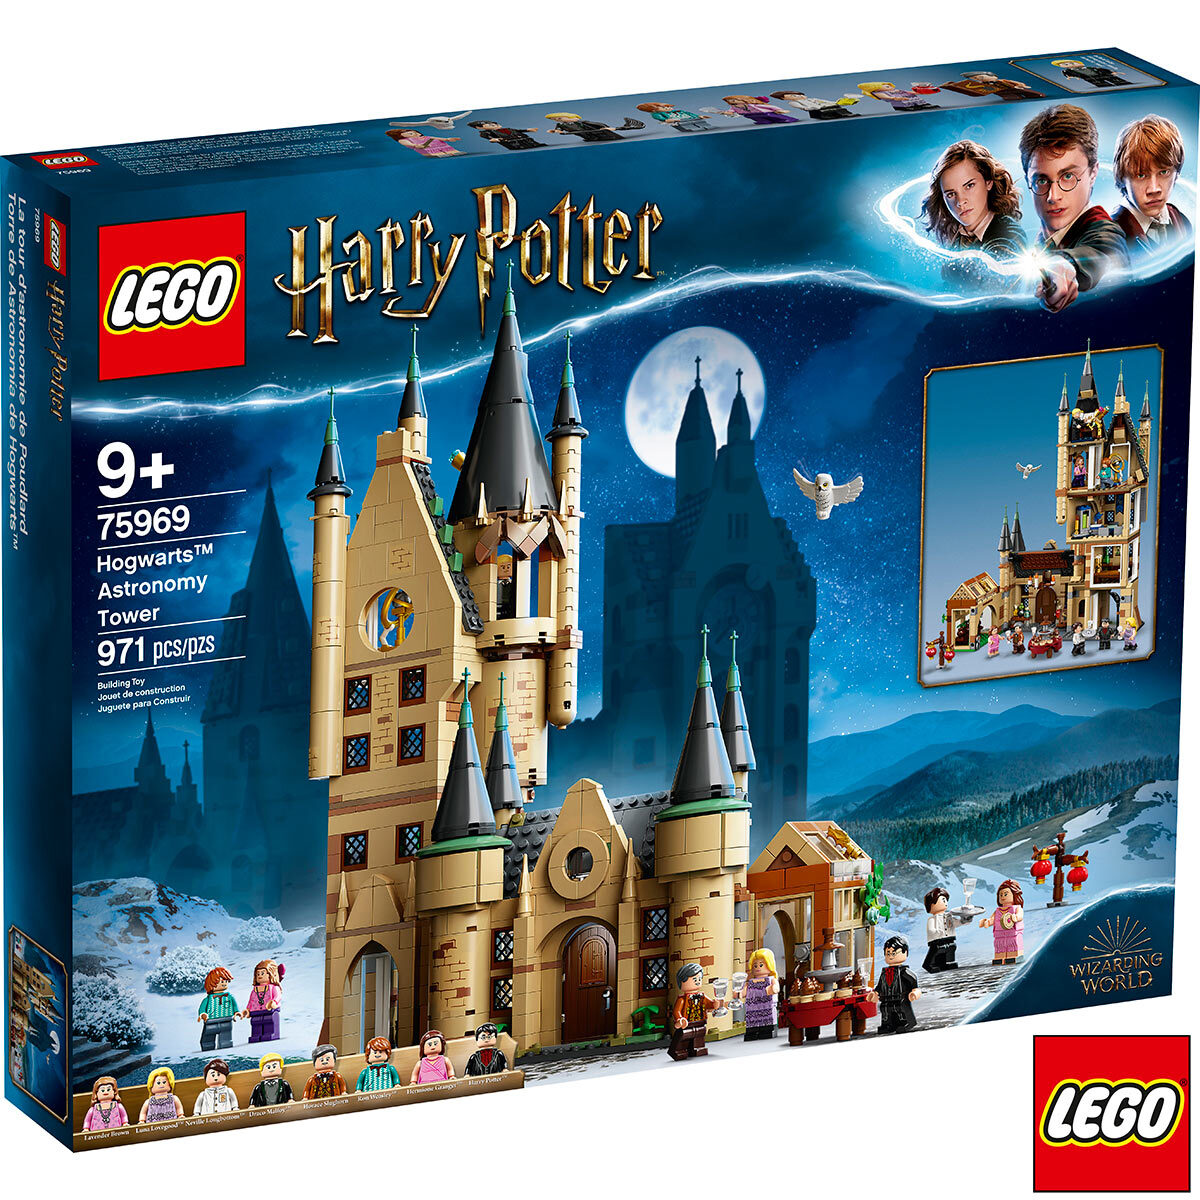 LEGO Harry Potter Hogwarts Astronomy Tower - Model 75969 (9+ Years)